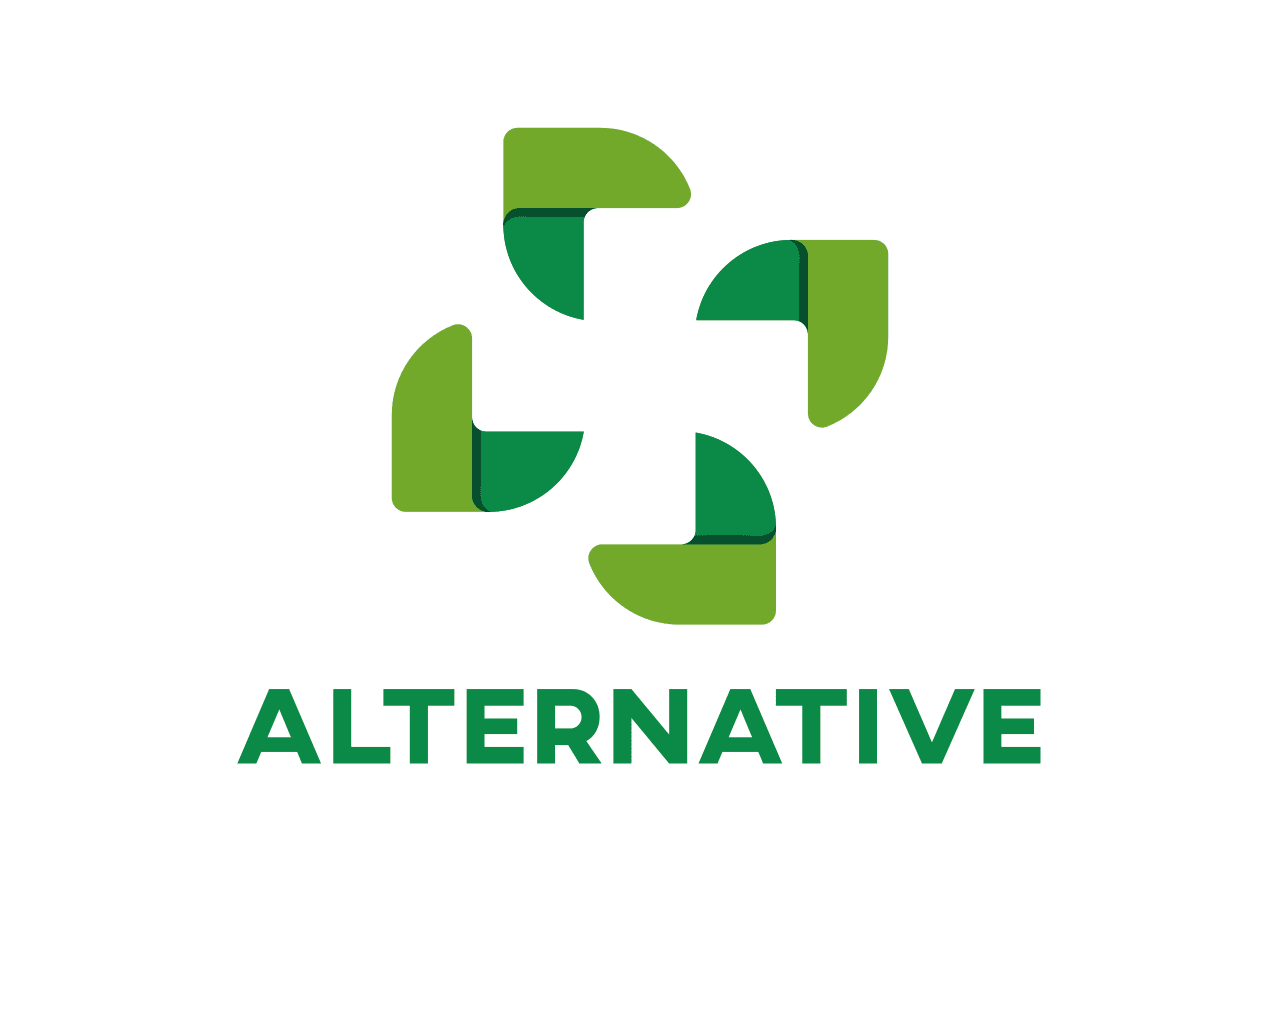 Alternative_Logo_ELV_microfluidics_in vitro system biomedical research